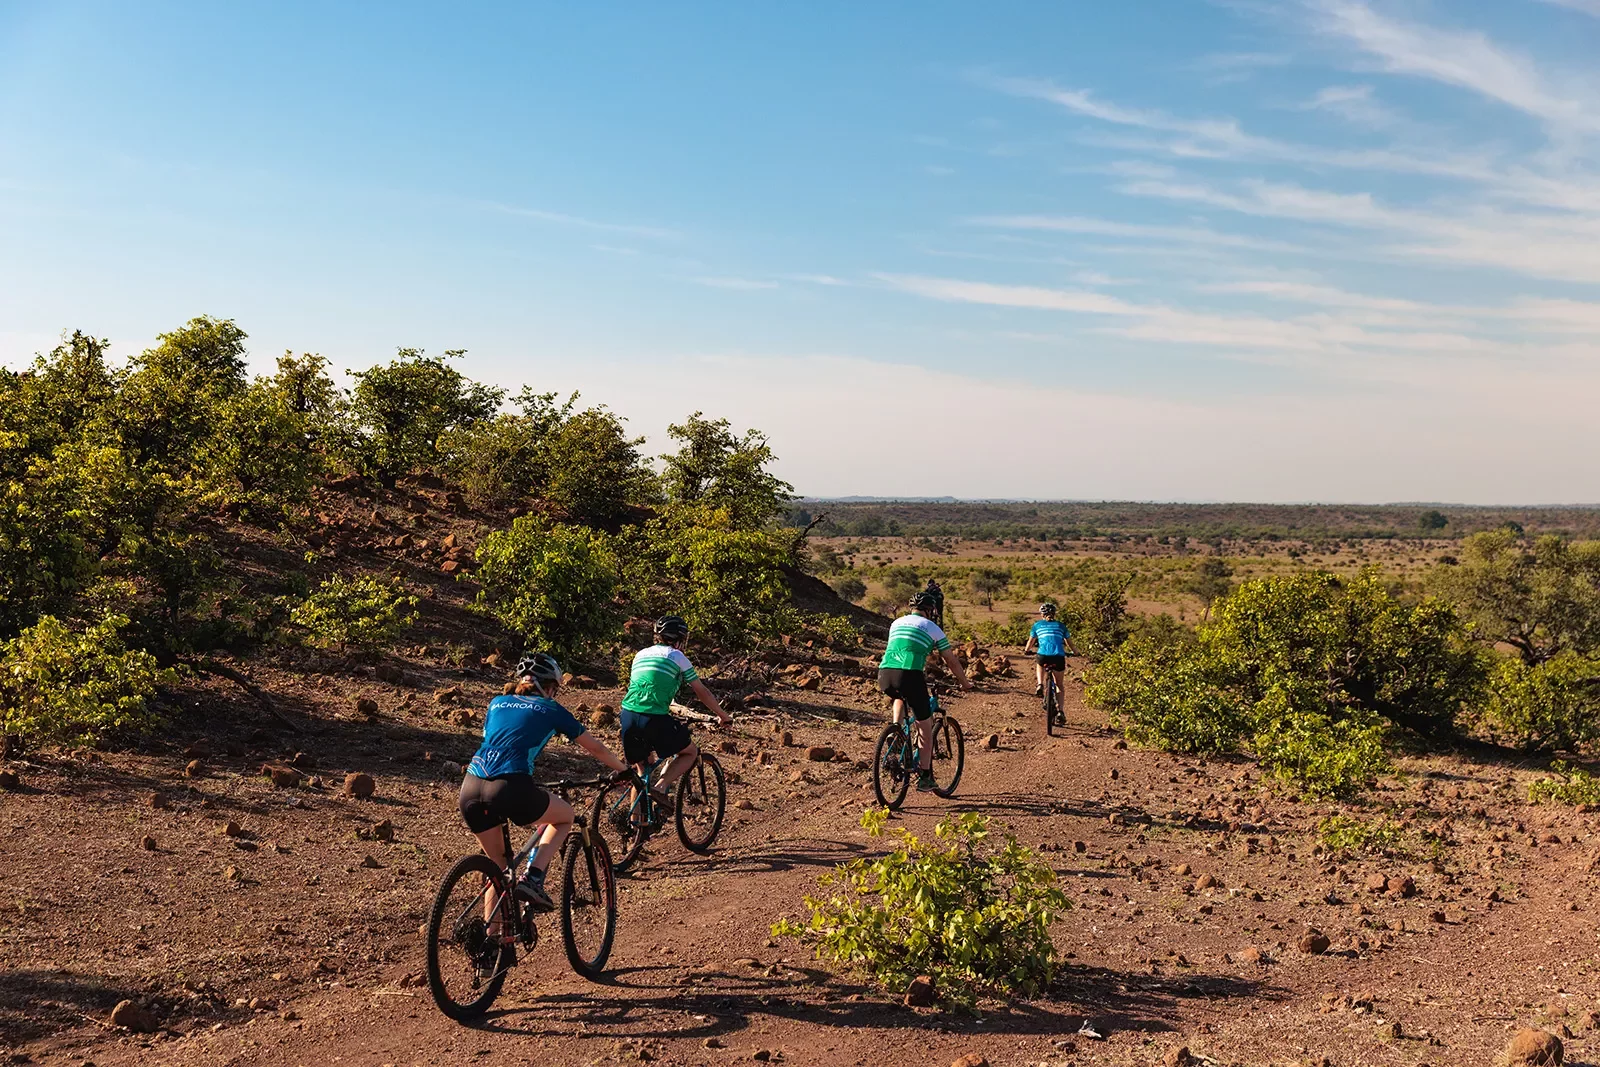 Bike riders cycle through a desert